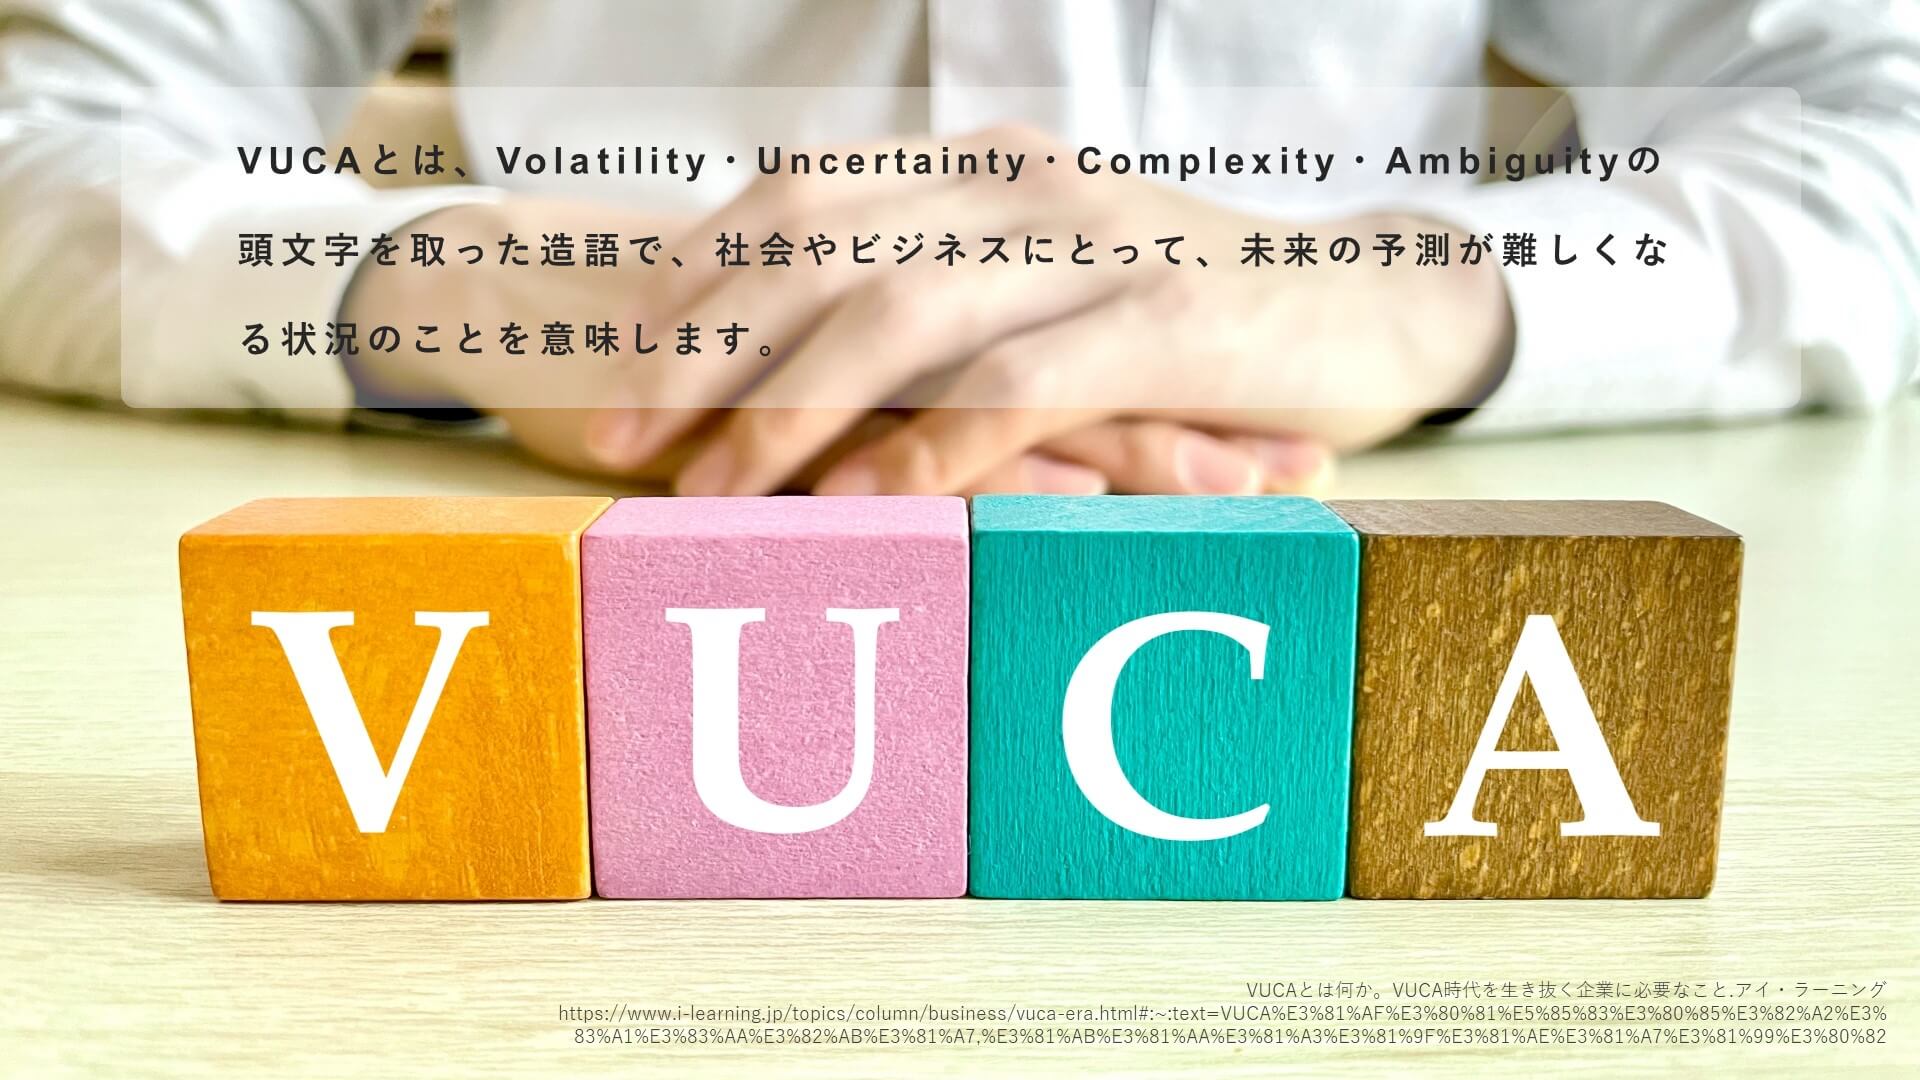 VUCAとは、Volatility・Uncertainty・Complexity・Ambiguityの 頭文字を取った造語で、社会やビジネスにとって、未来の予測が難しくなる状況のことを意味します。